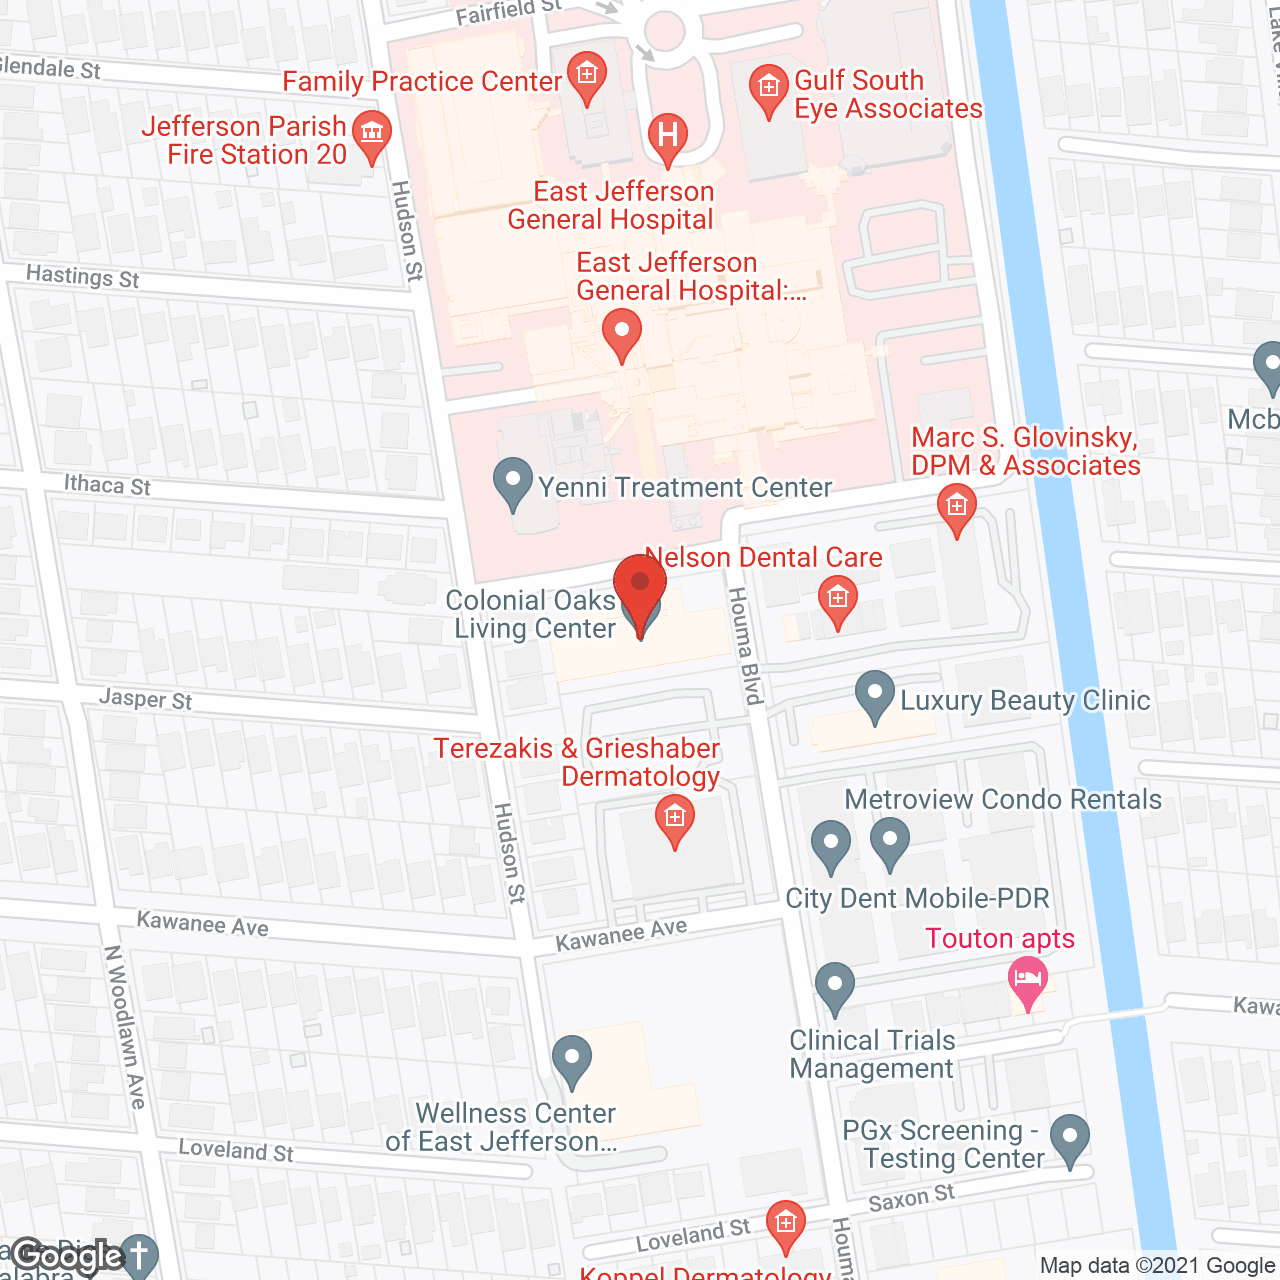 Colonial Oaks Living Center in google map